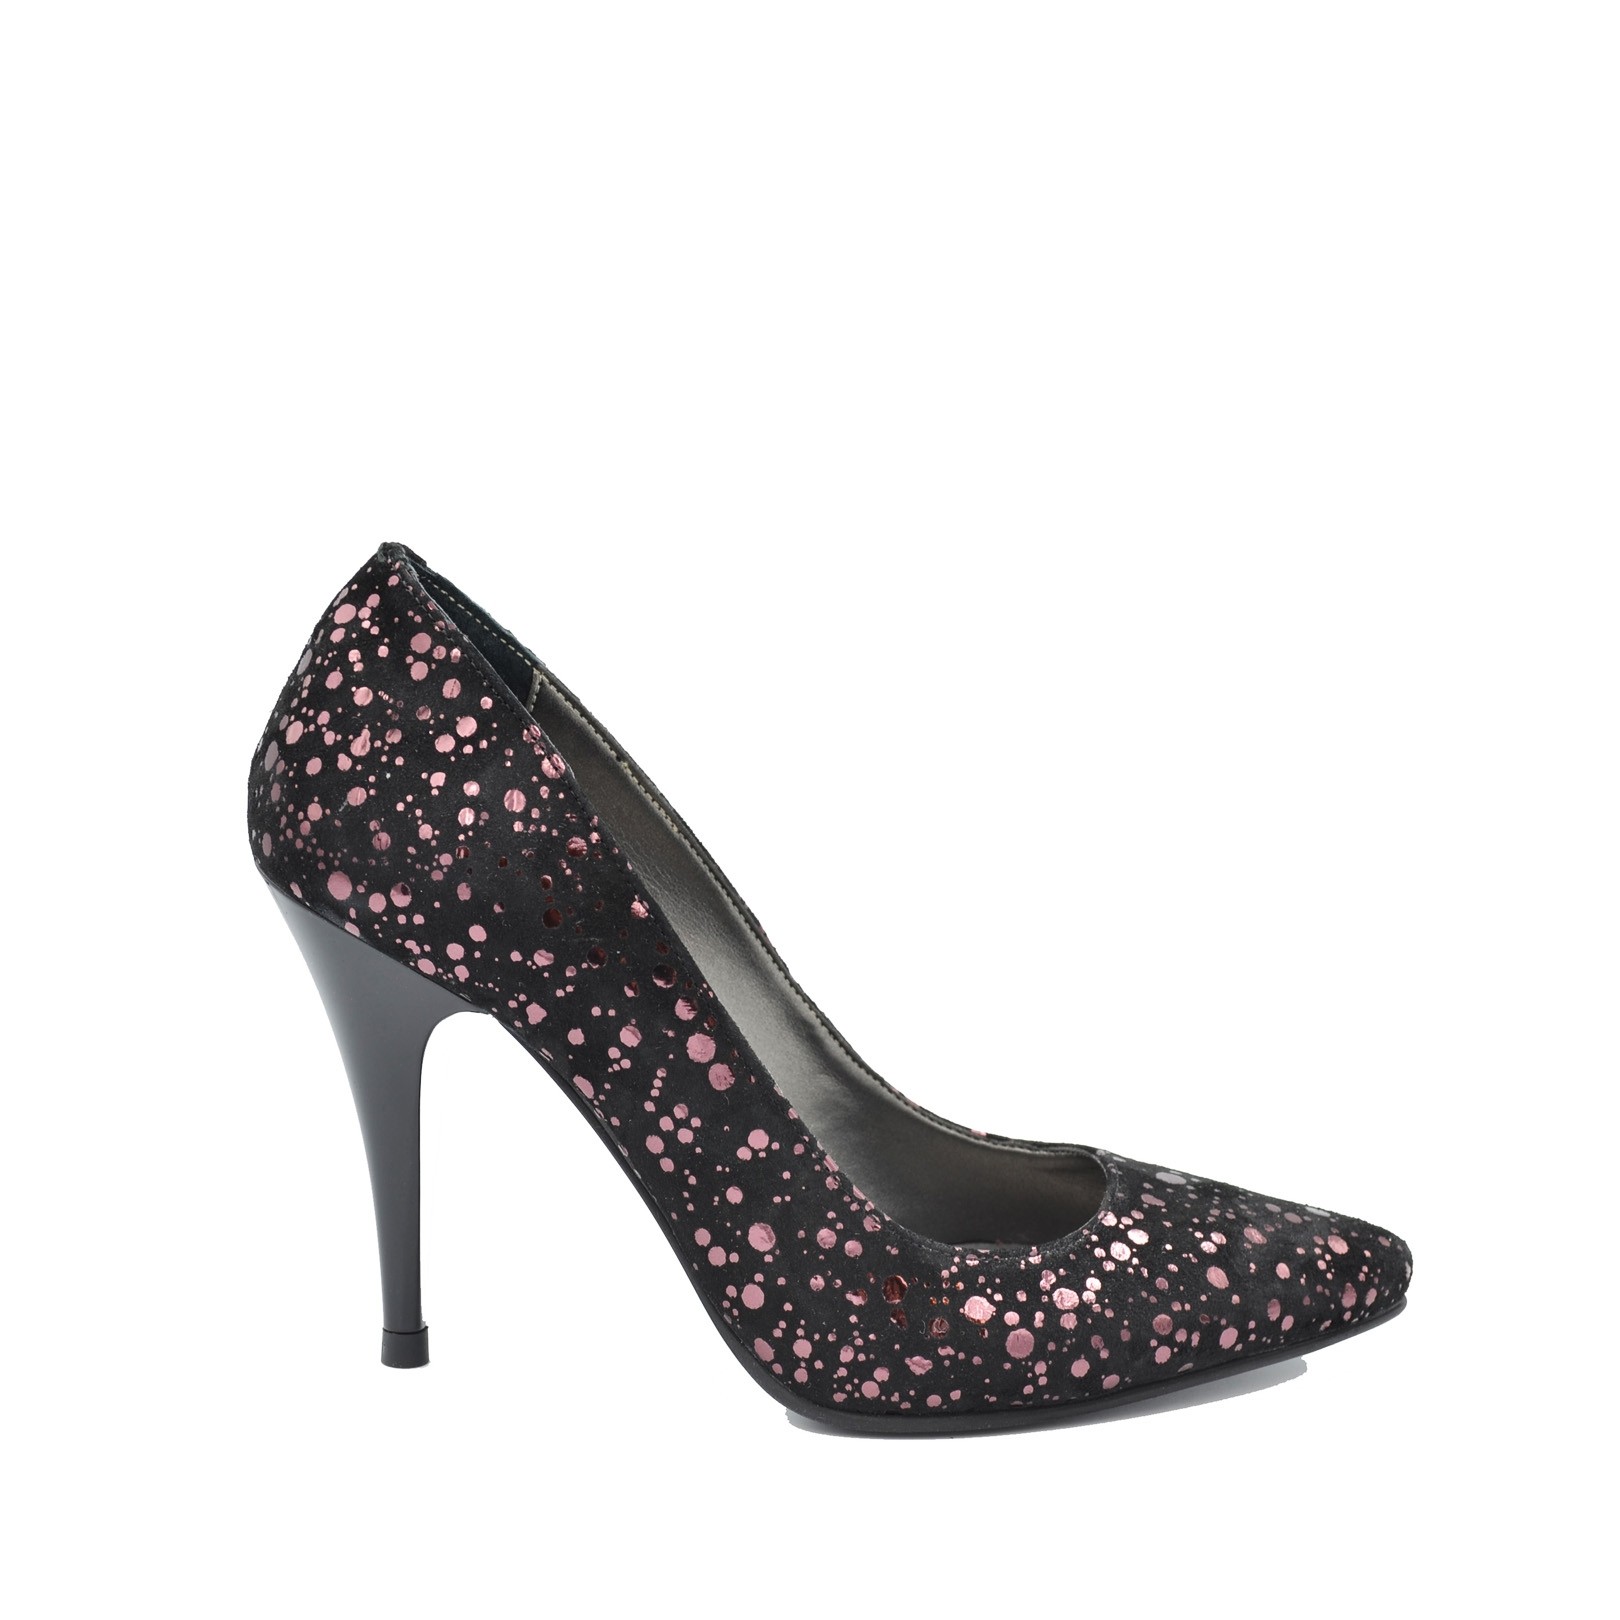 Pantofi Stiletto piele naturala negru + roz Nicolette